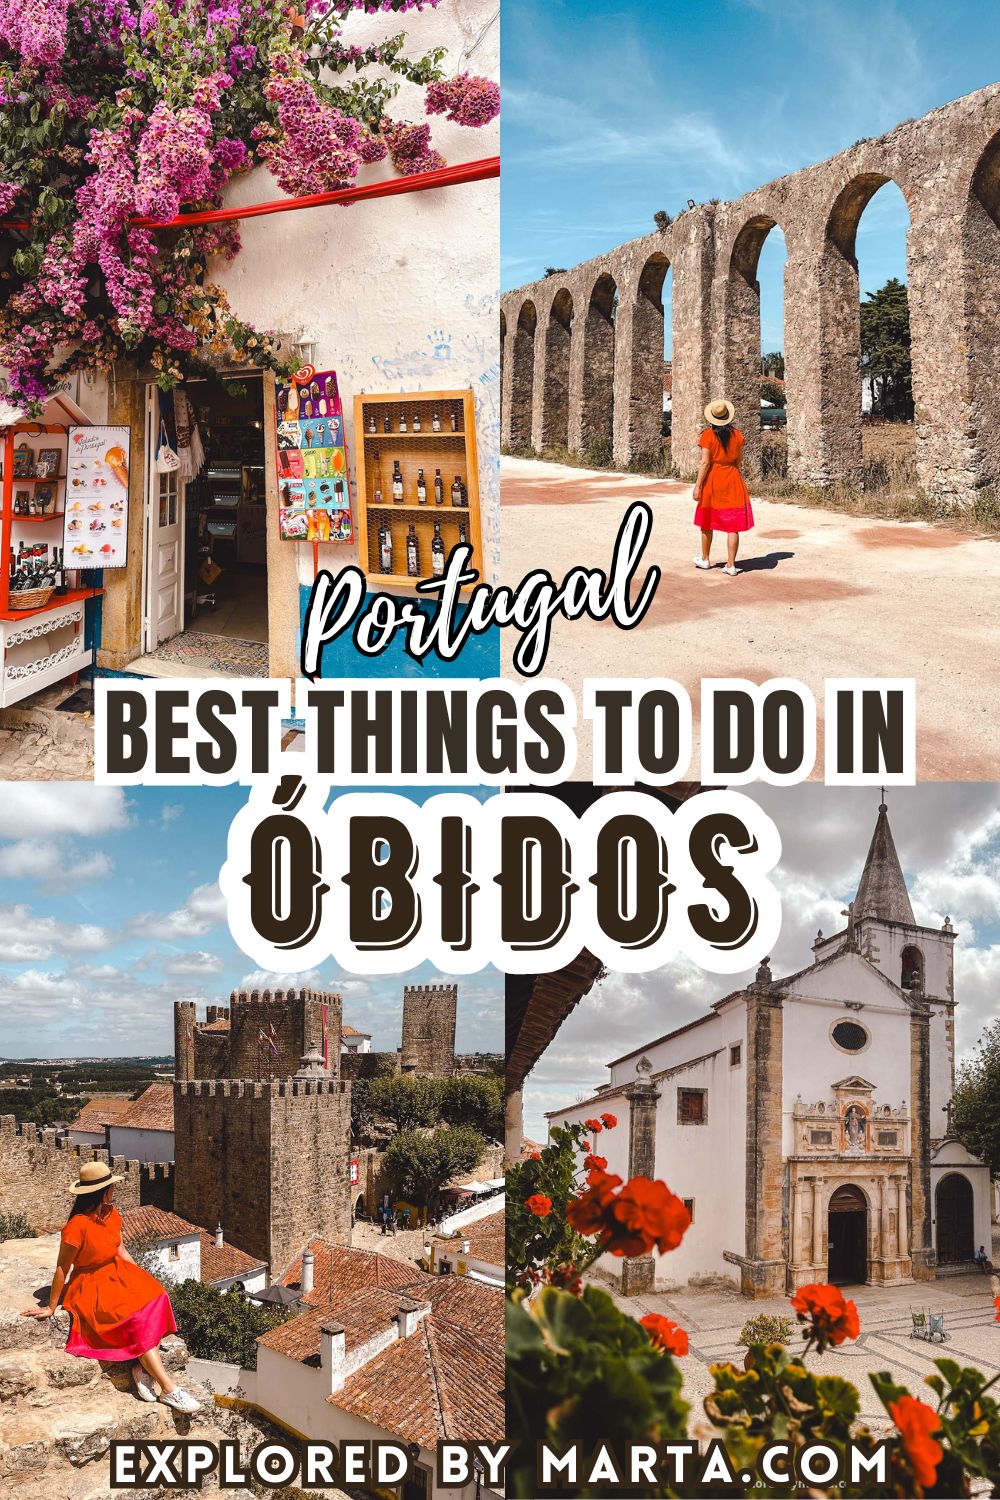 Óbidos, Portugal best things to do